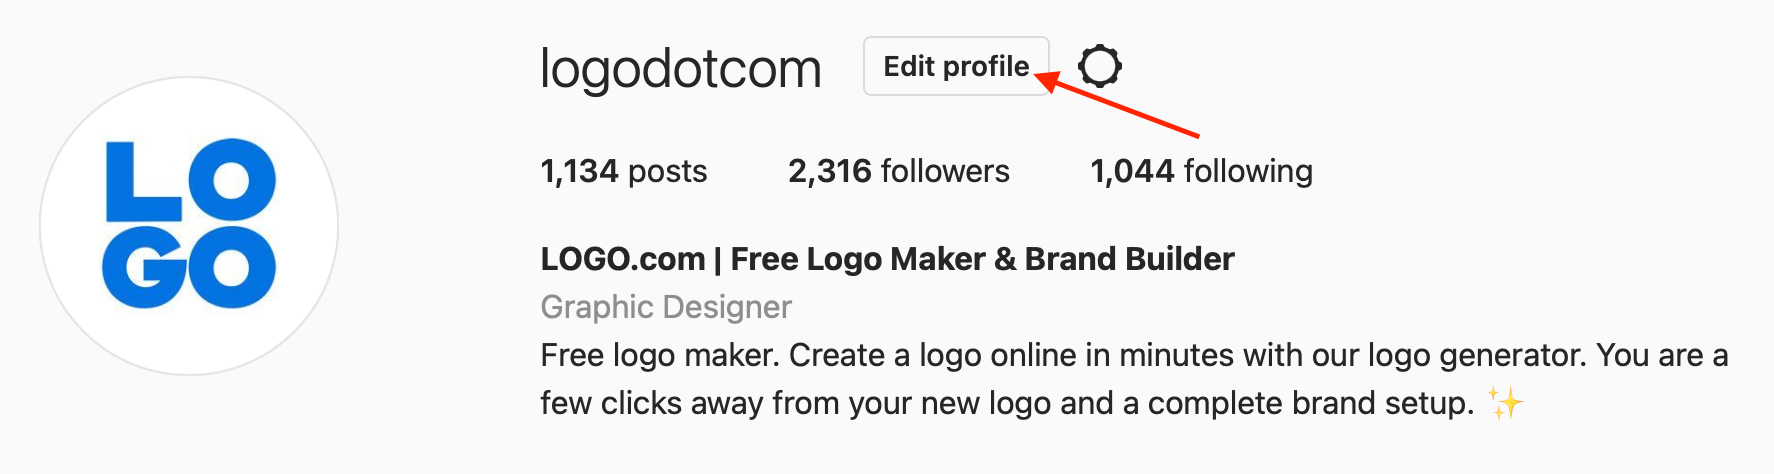 instagram-profile-logo-example 